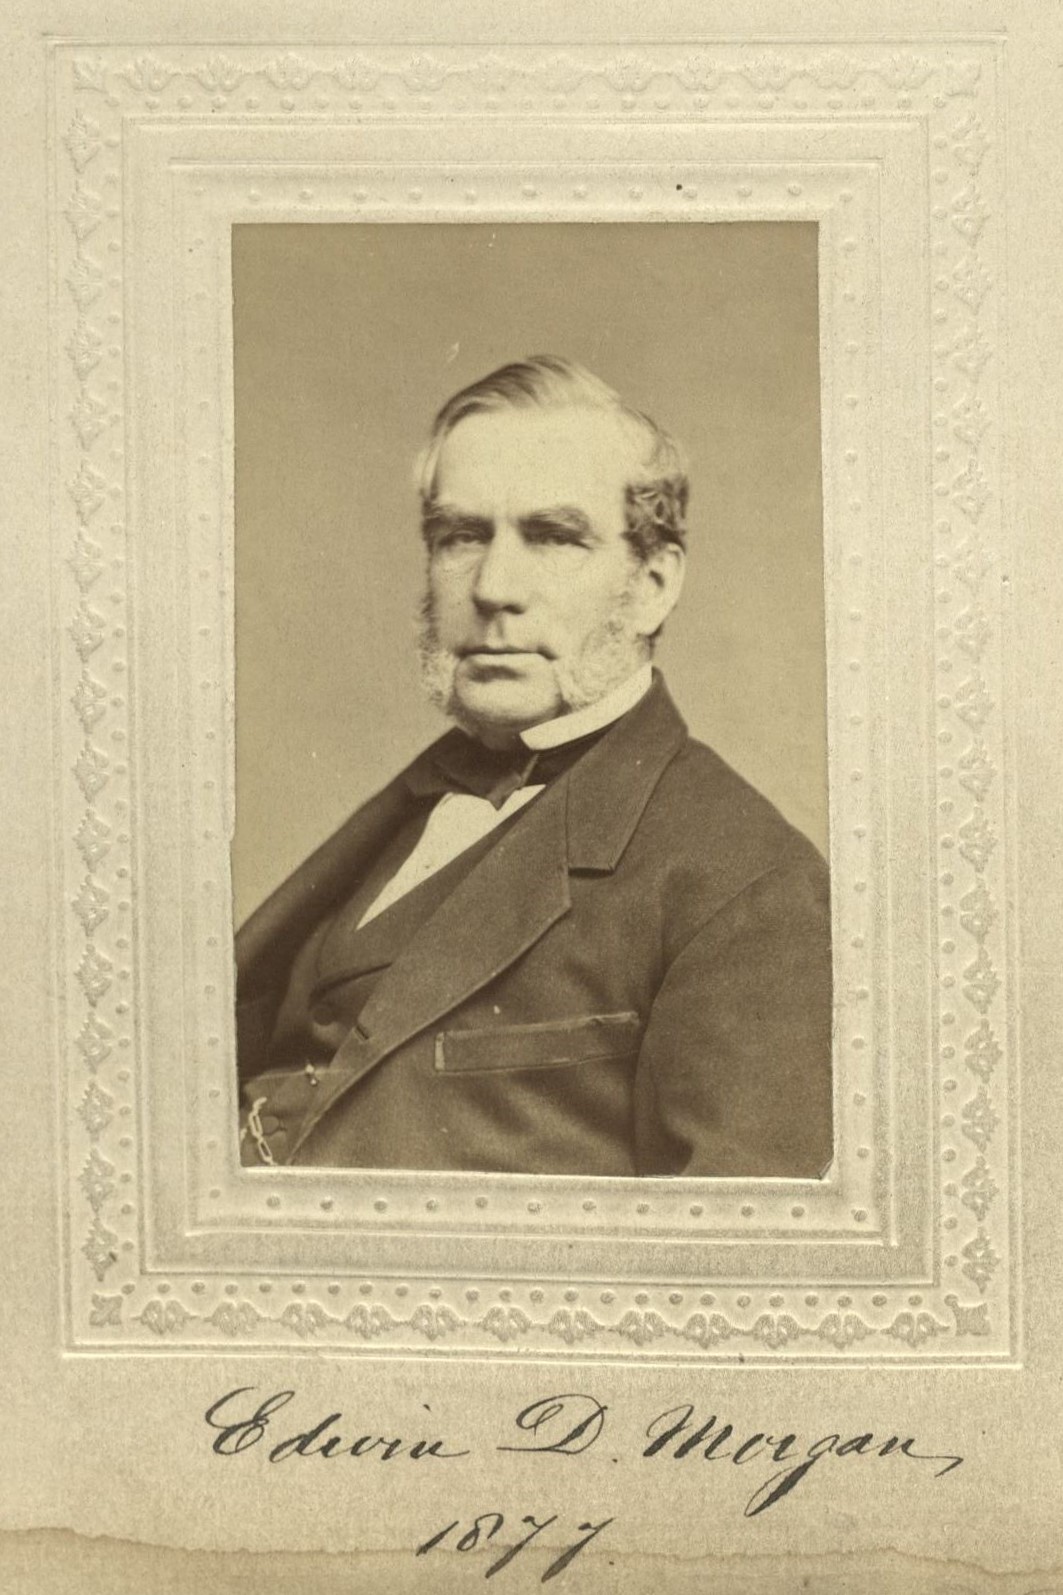 Member portrait of Edwin D. Morgan